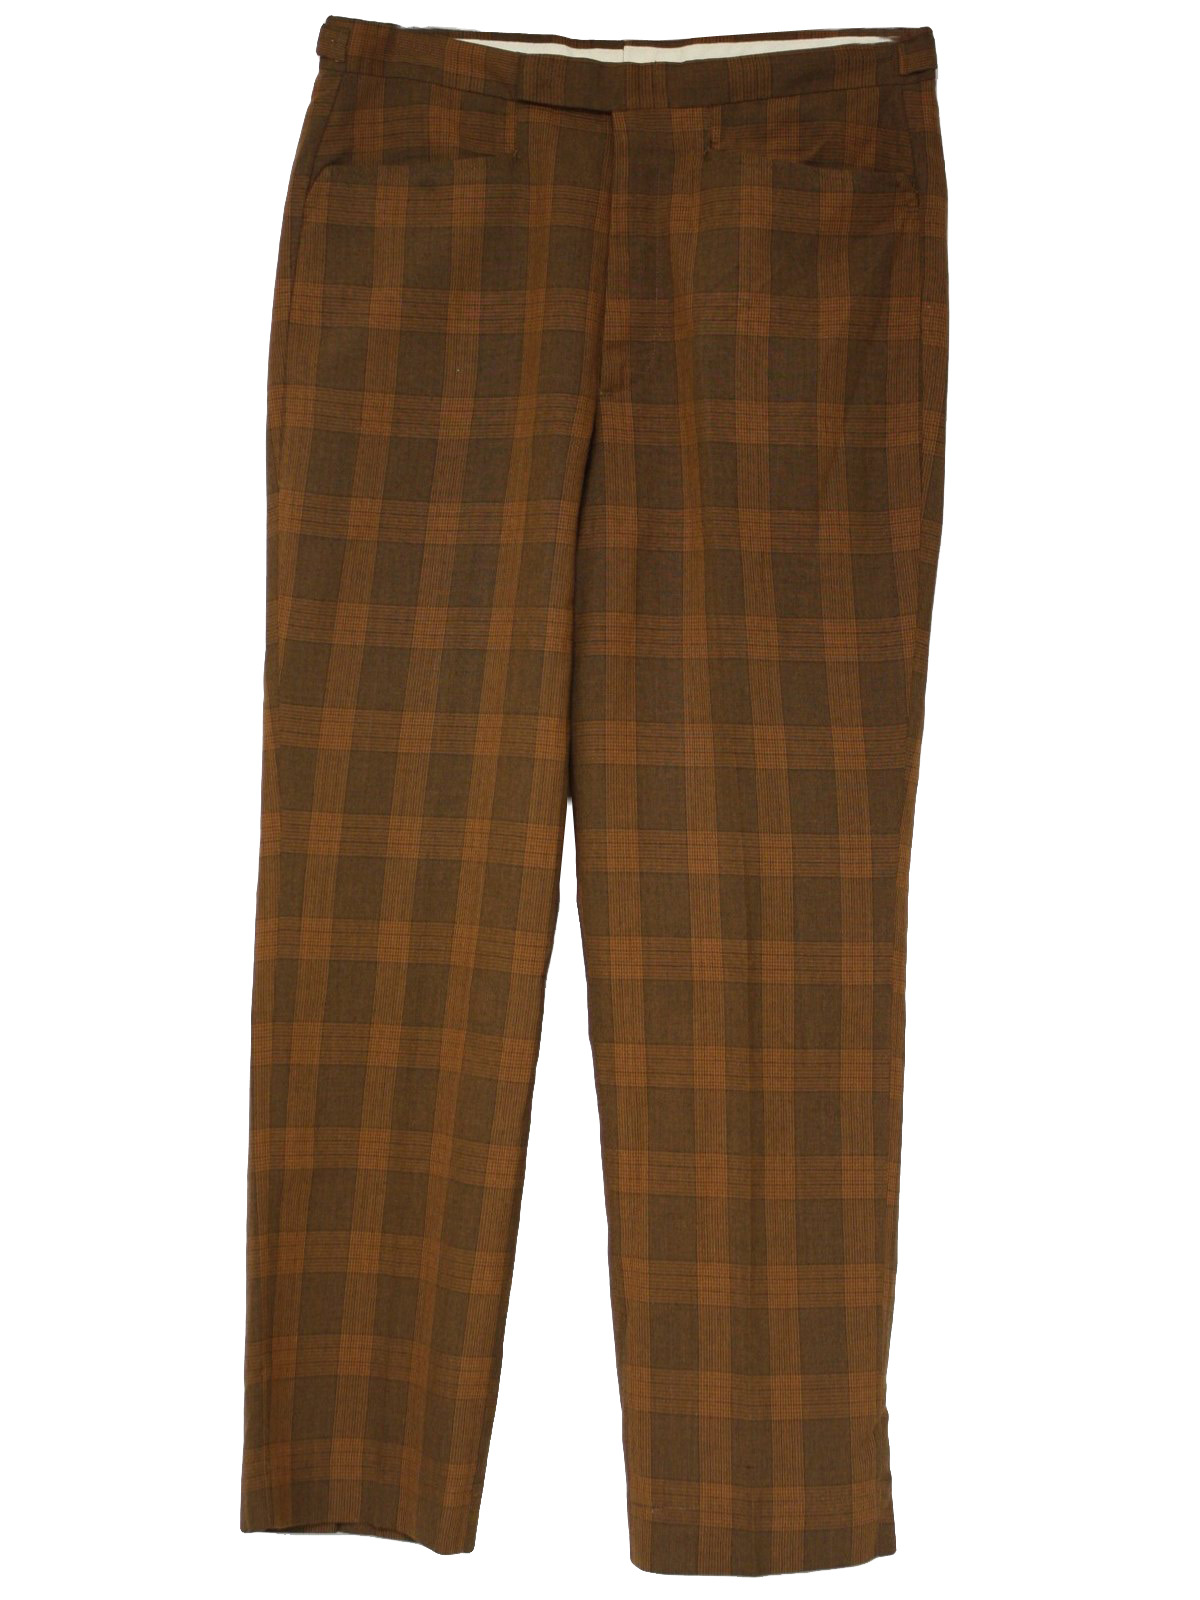 brown plaid pants - Pi Pants